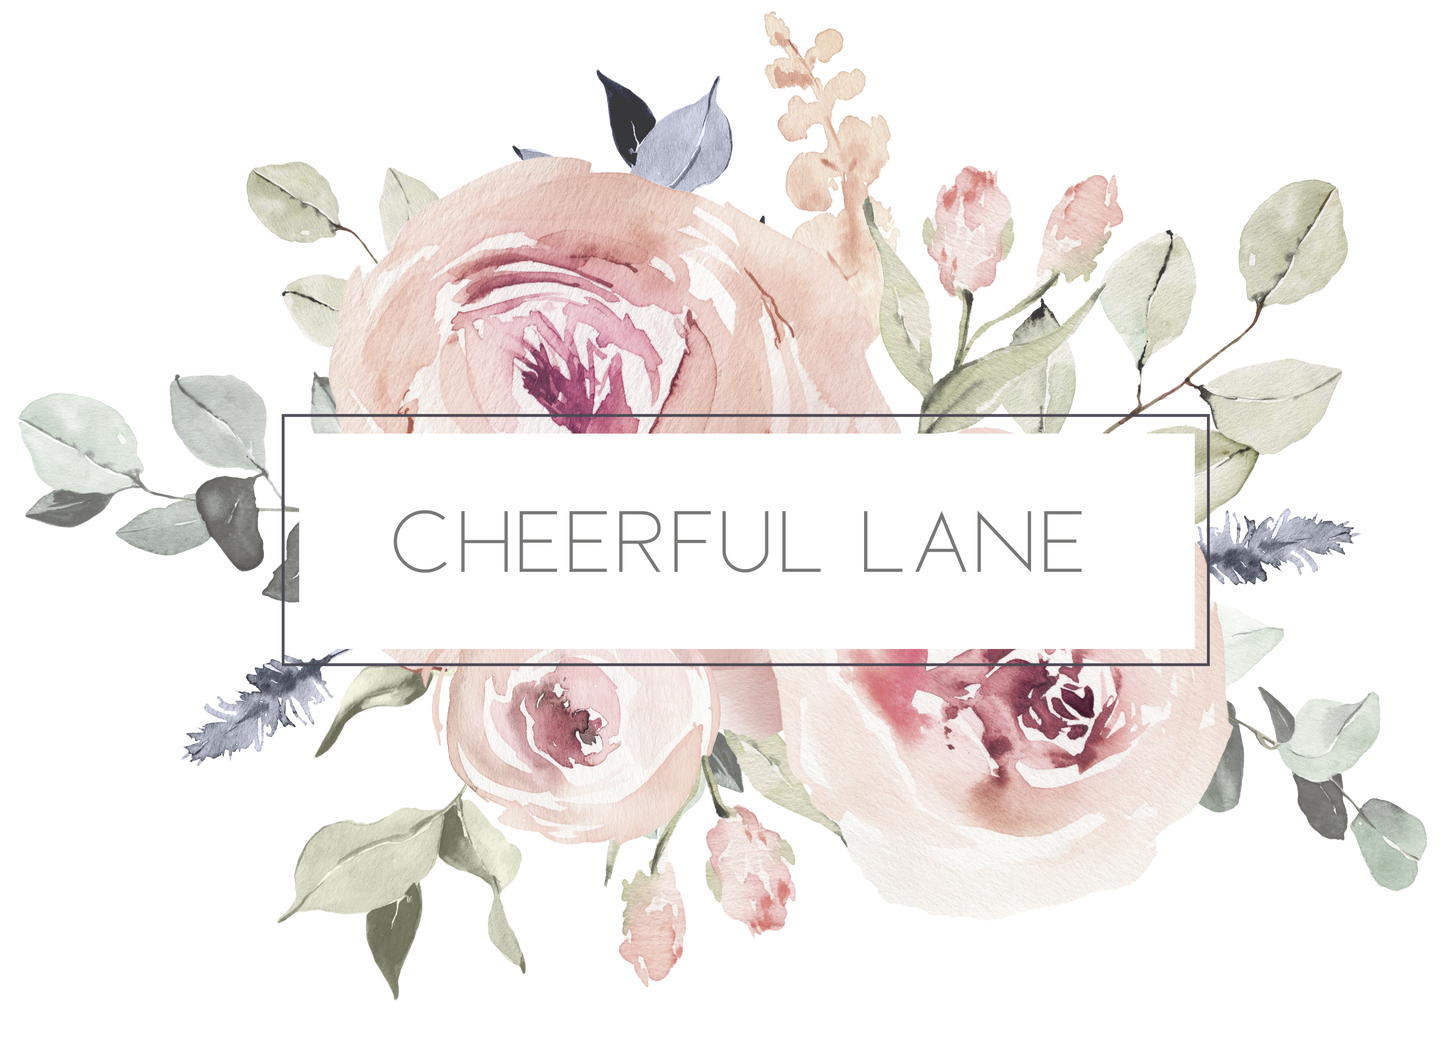 Cheerful Lane